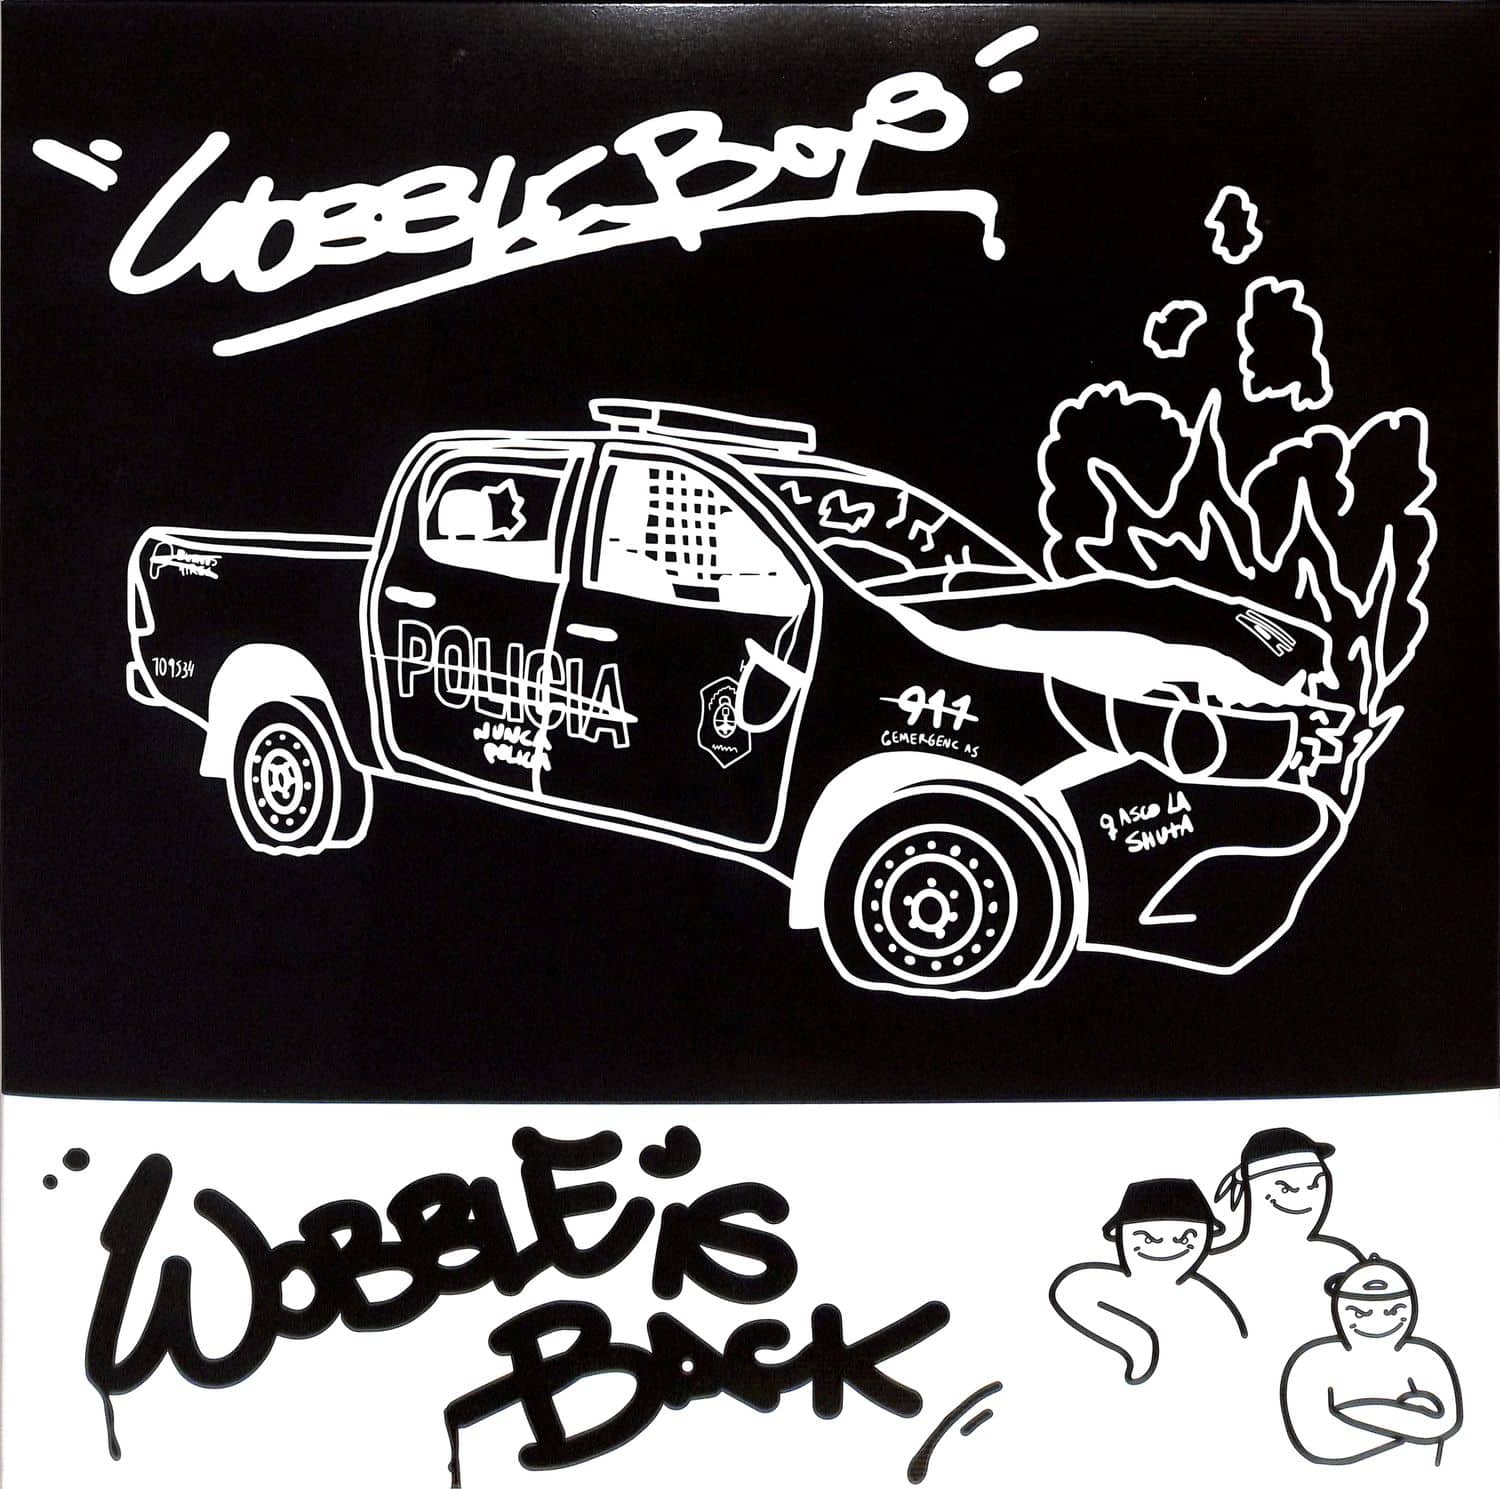 Wobble Boys - WOBBLE IS BACK